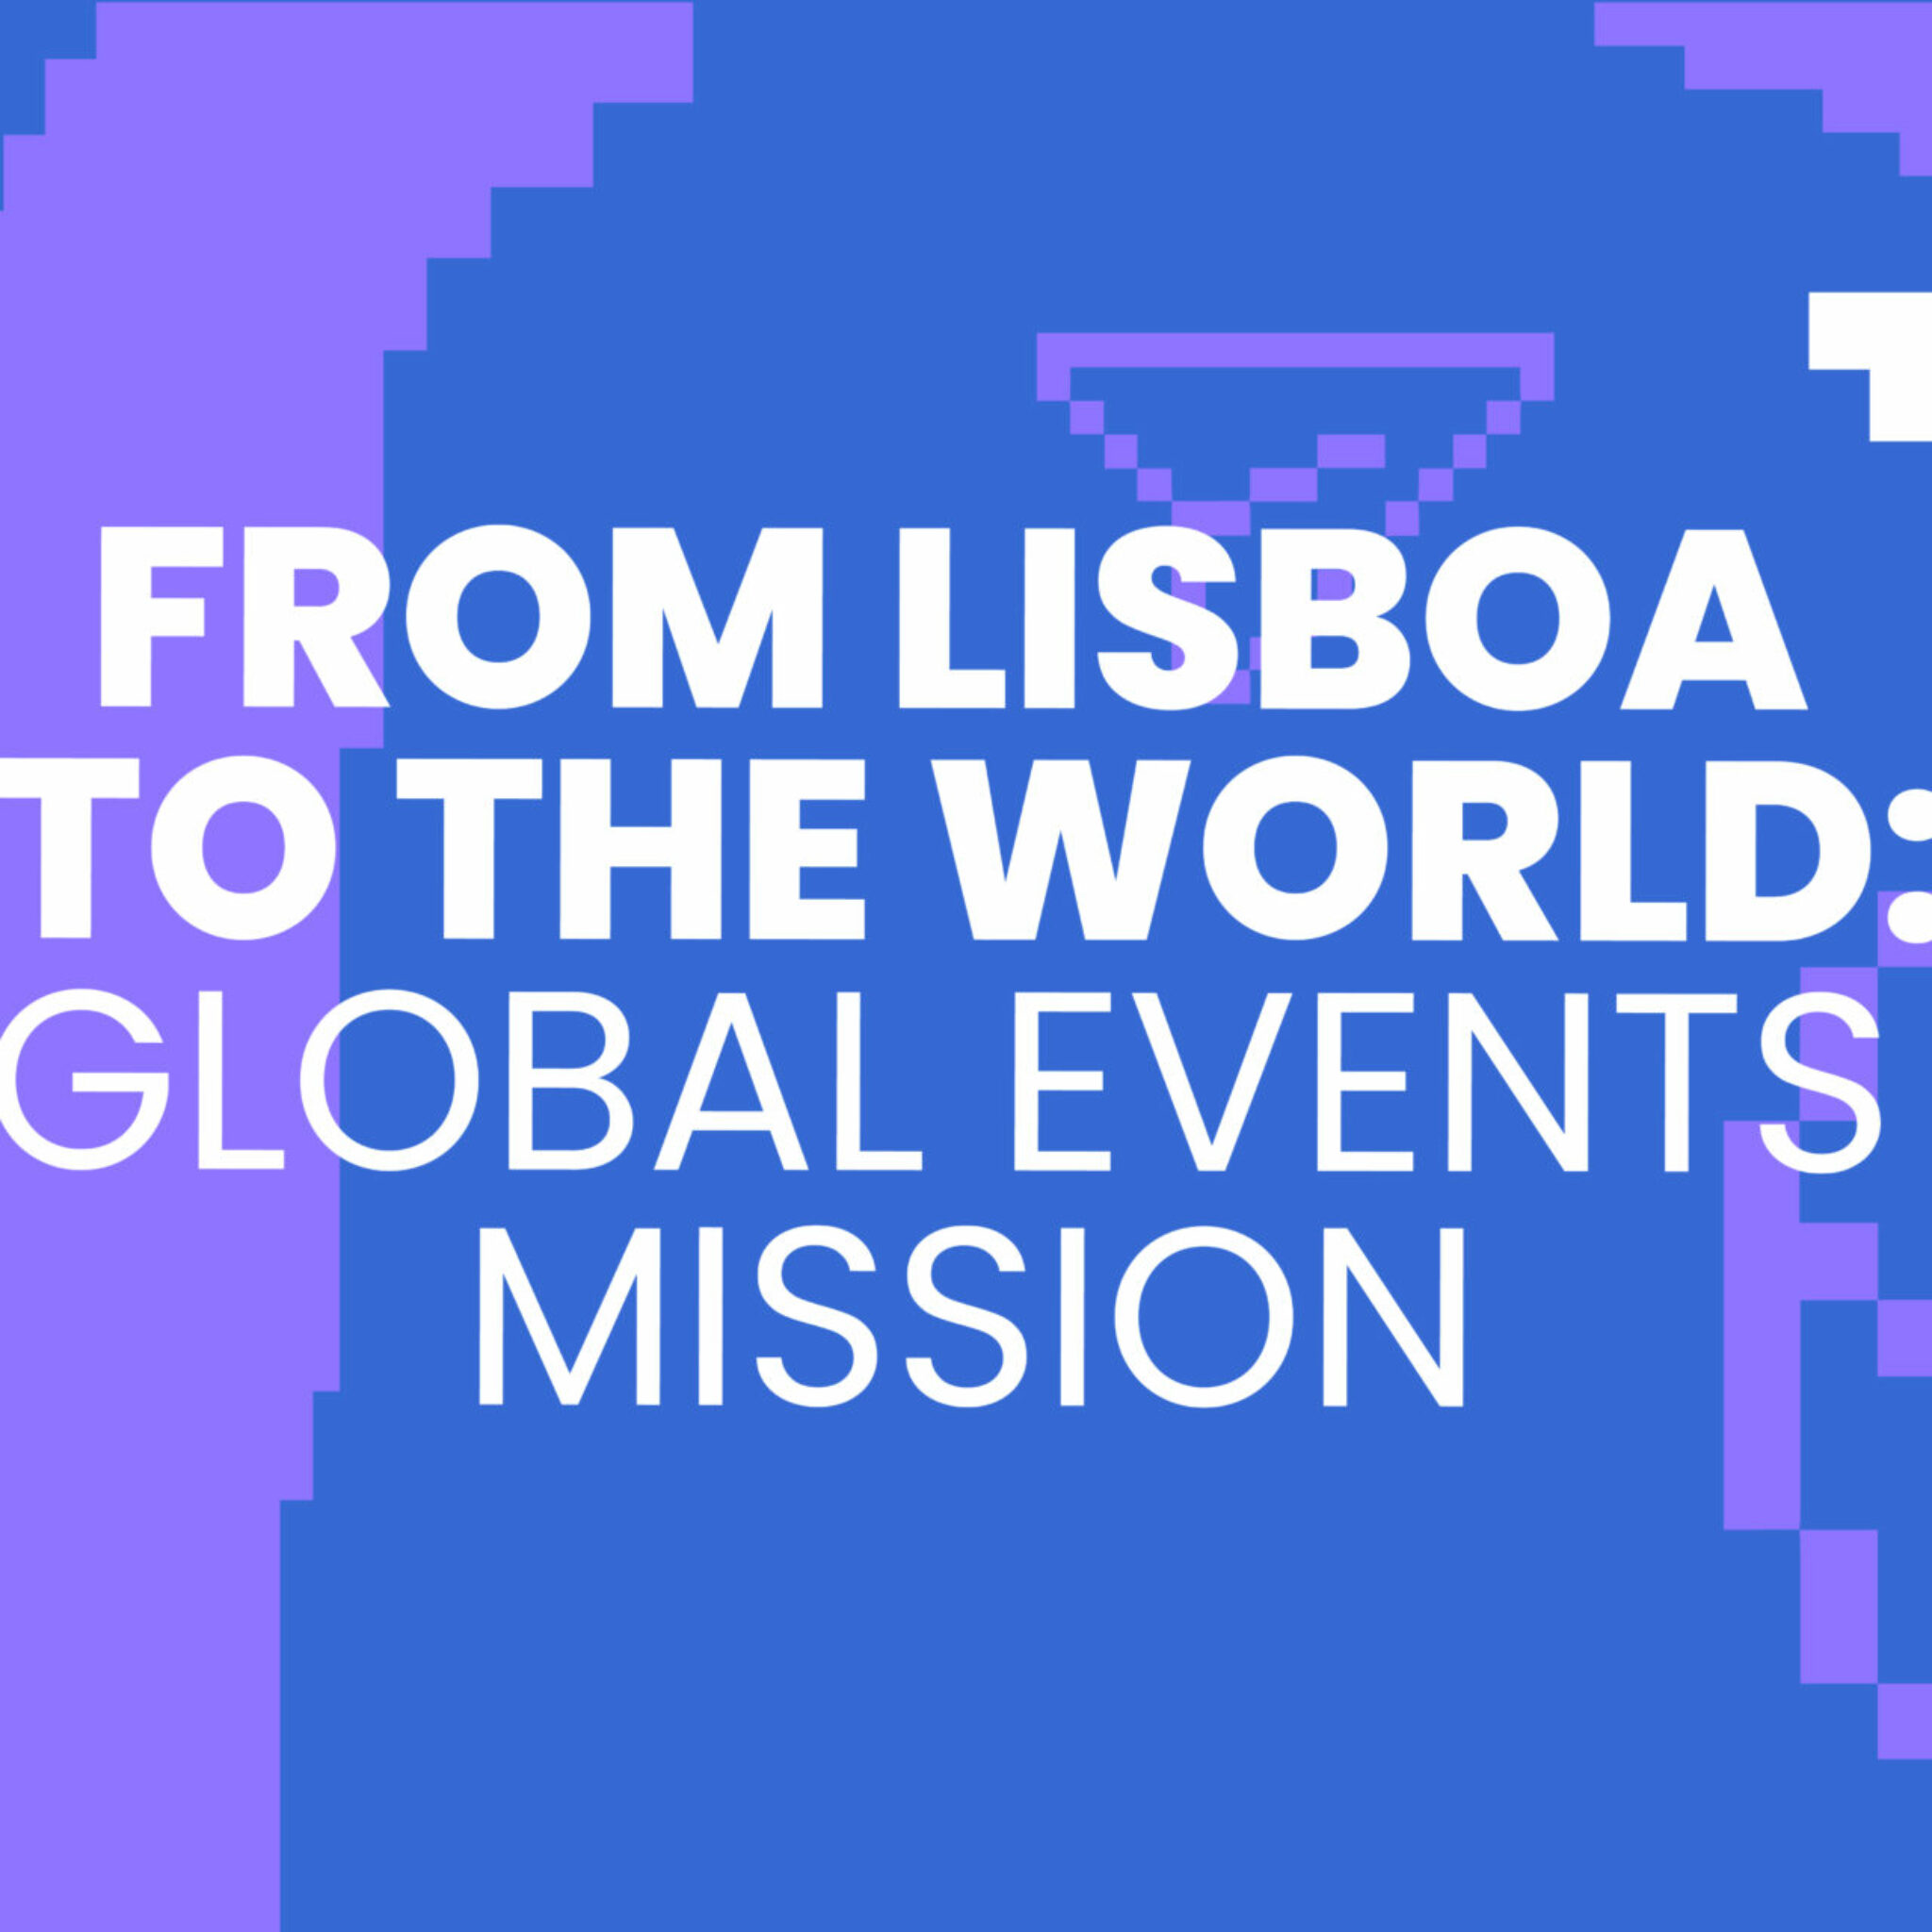 Open Day – Lisboa Innovation Hubs